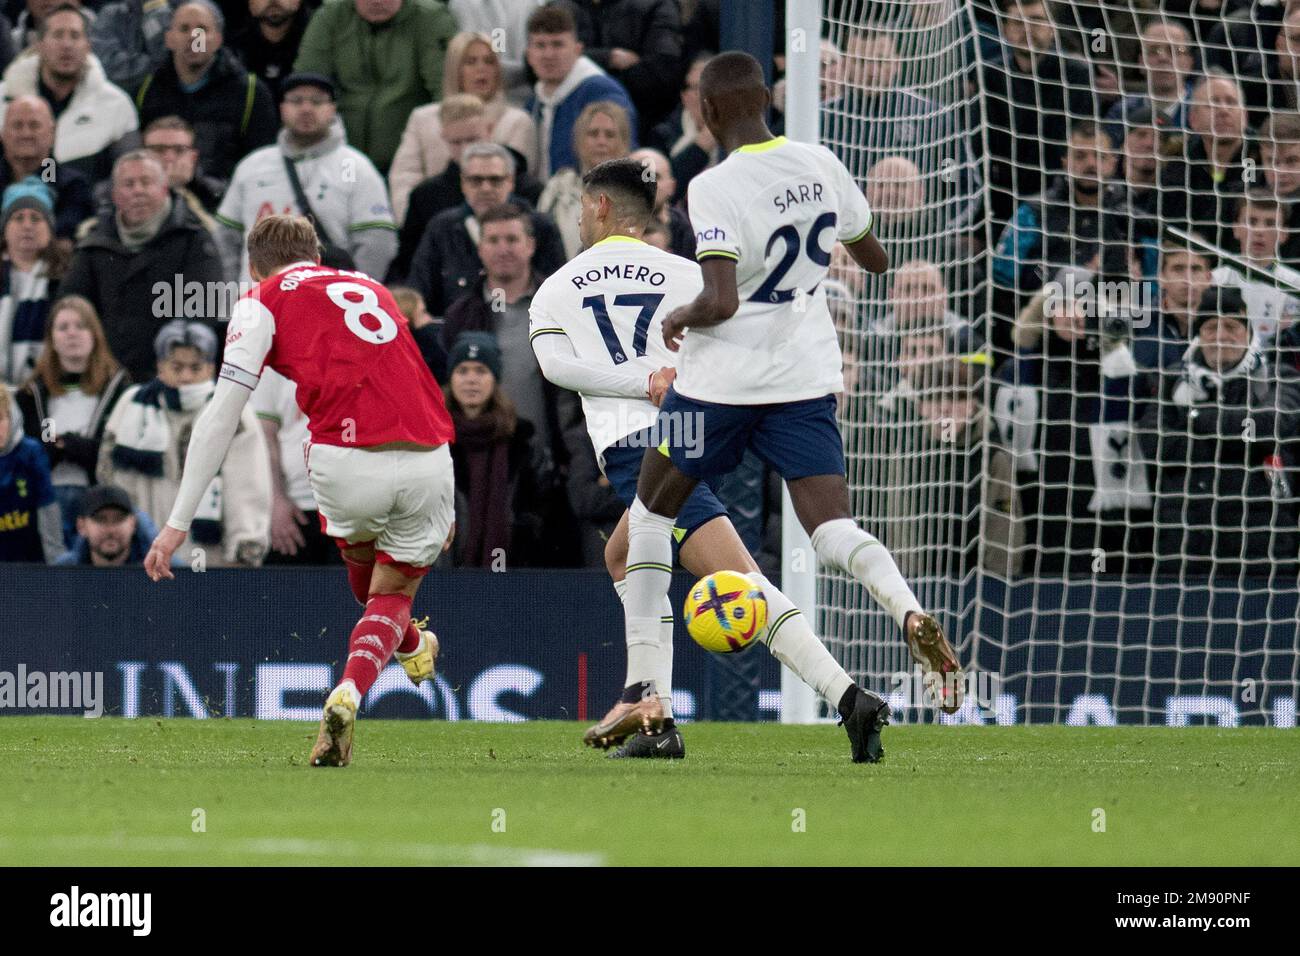 Tottenham vs Arsenal LIVE: Premier League result and final score today